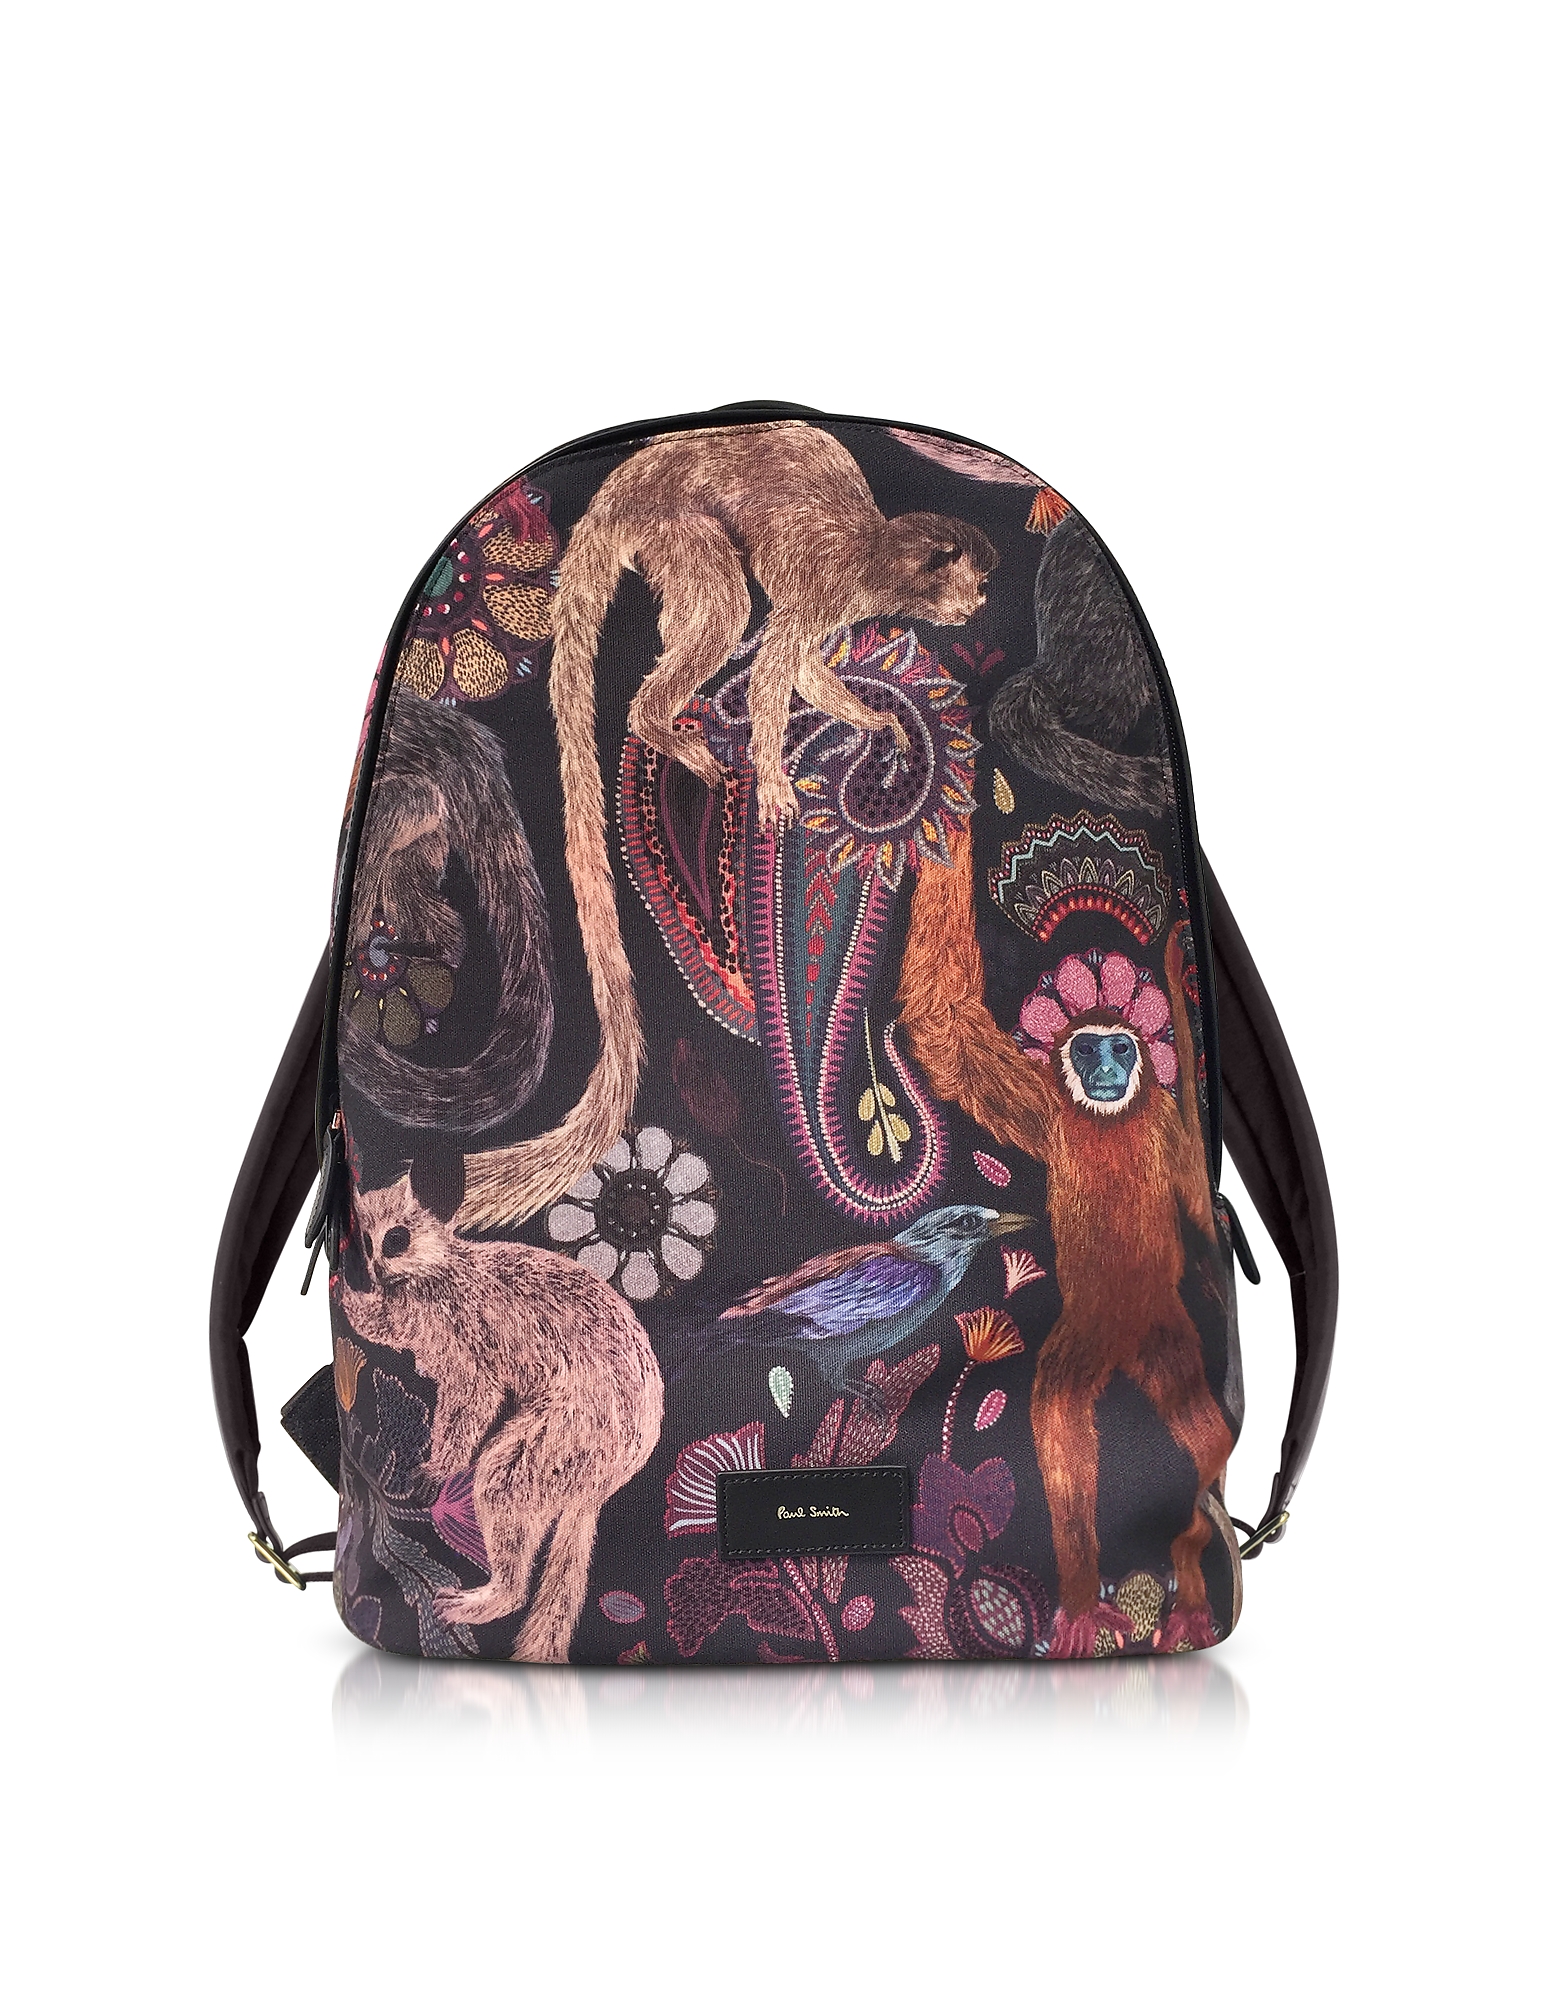 Paul Smith Black Canvas Monkey Print Backpack